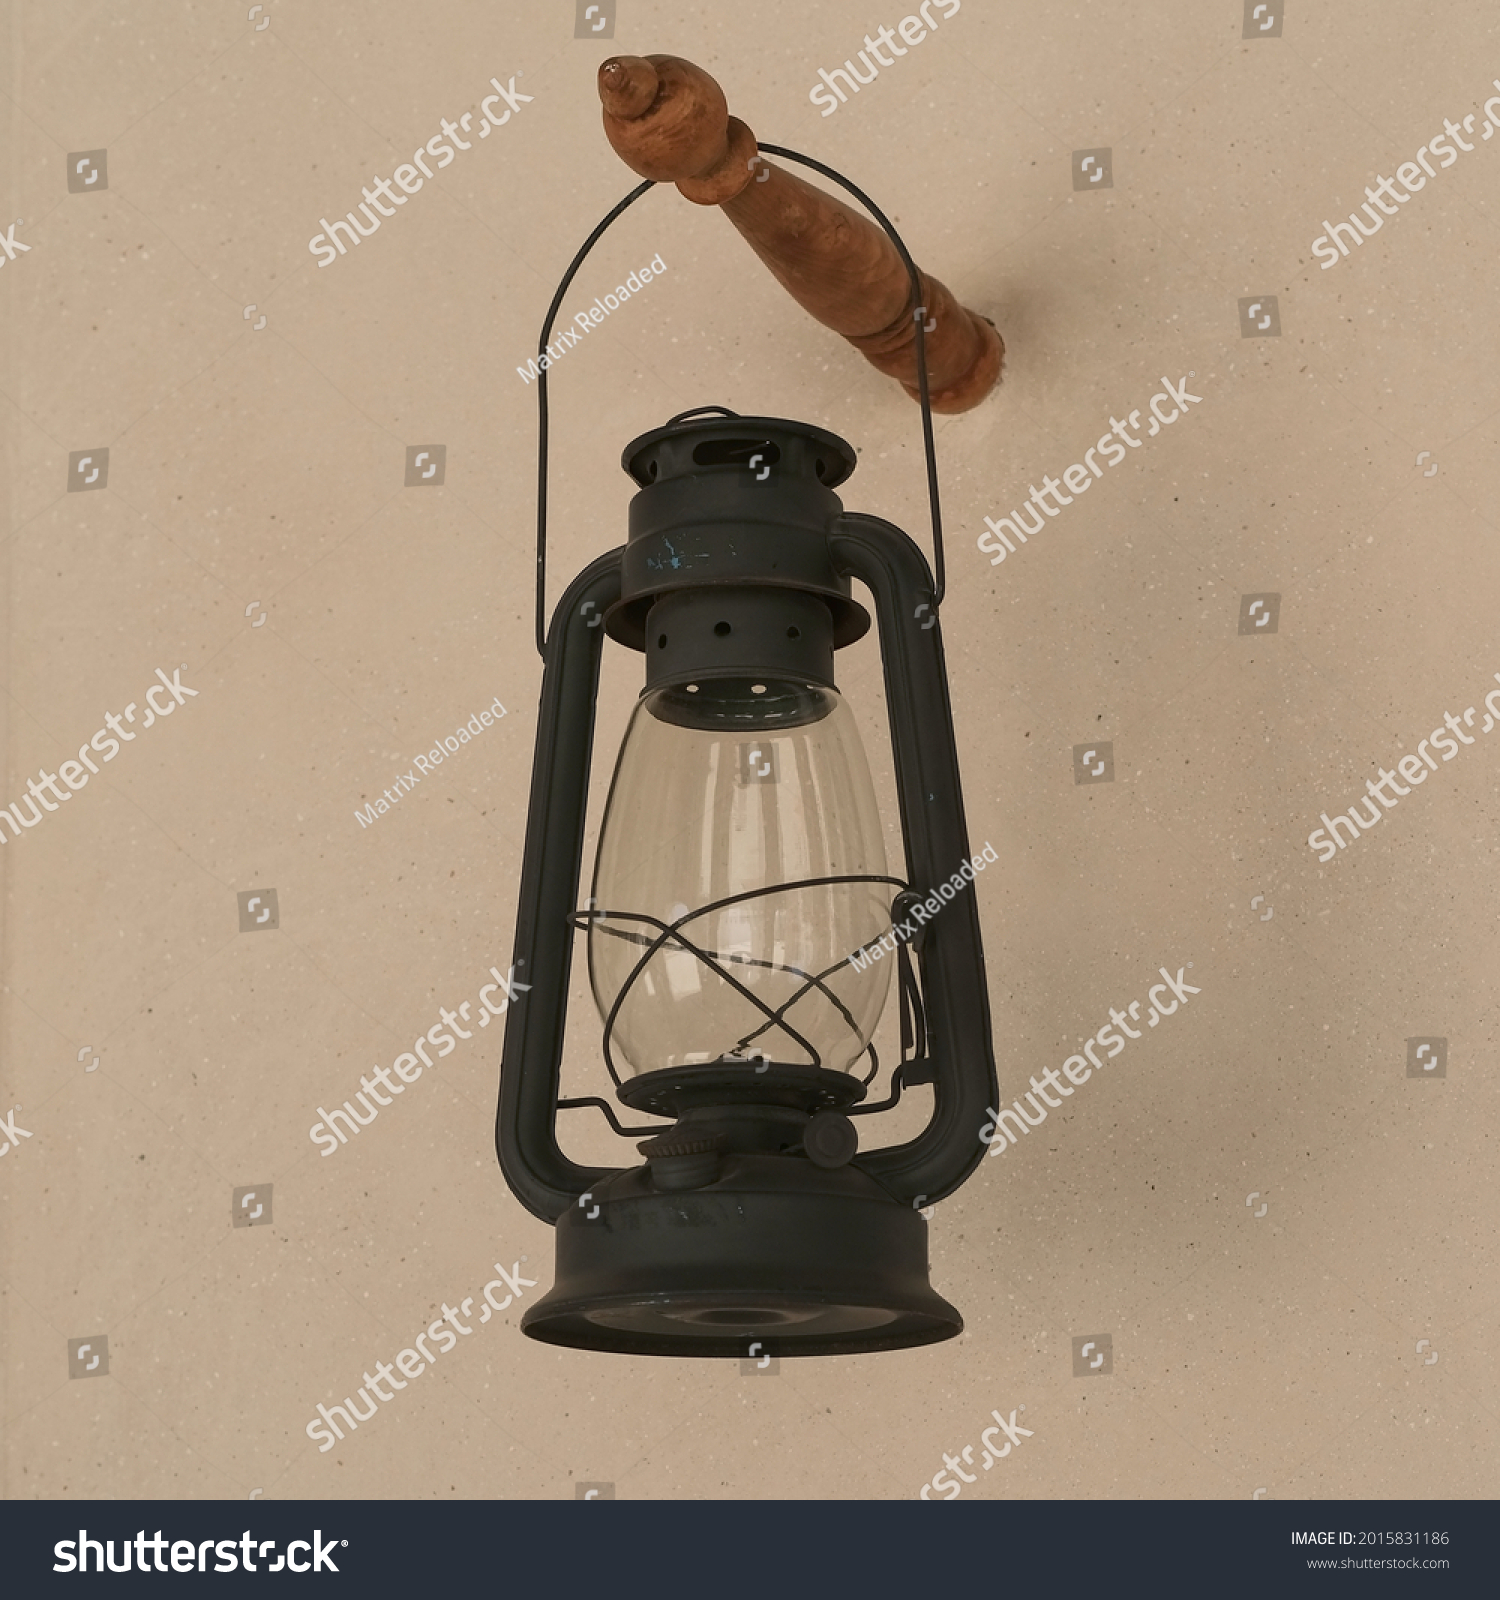 Vintage black gasoline lantern hanging on stucco wall background after renovation . Antique obsolete repaired kerosene lamp close up. Old oil lamp #2015831186